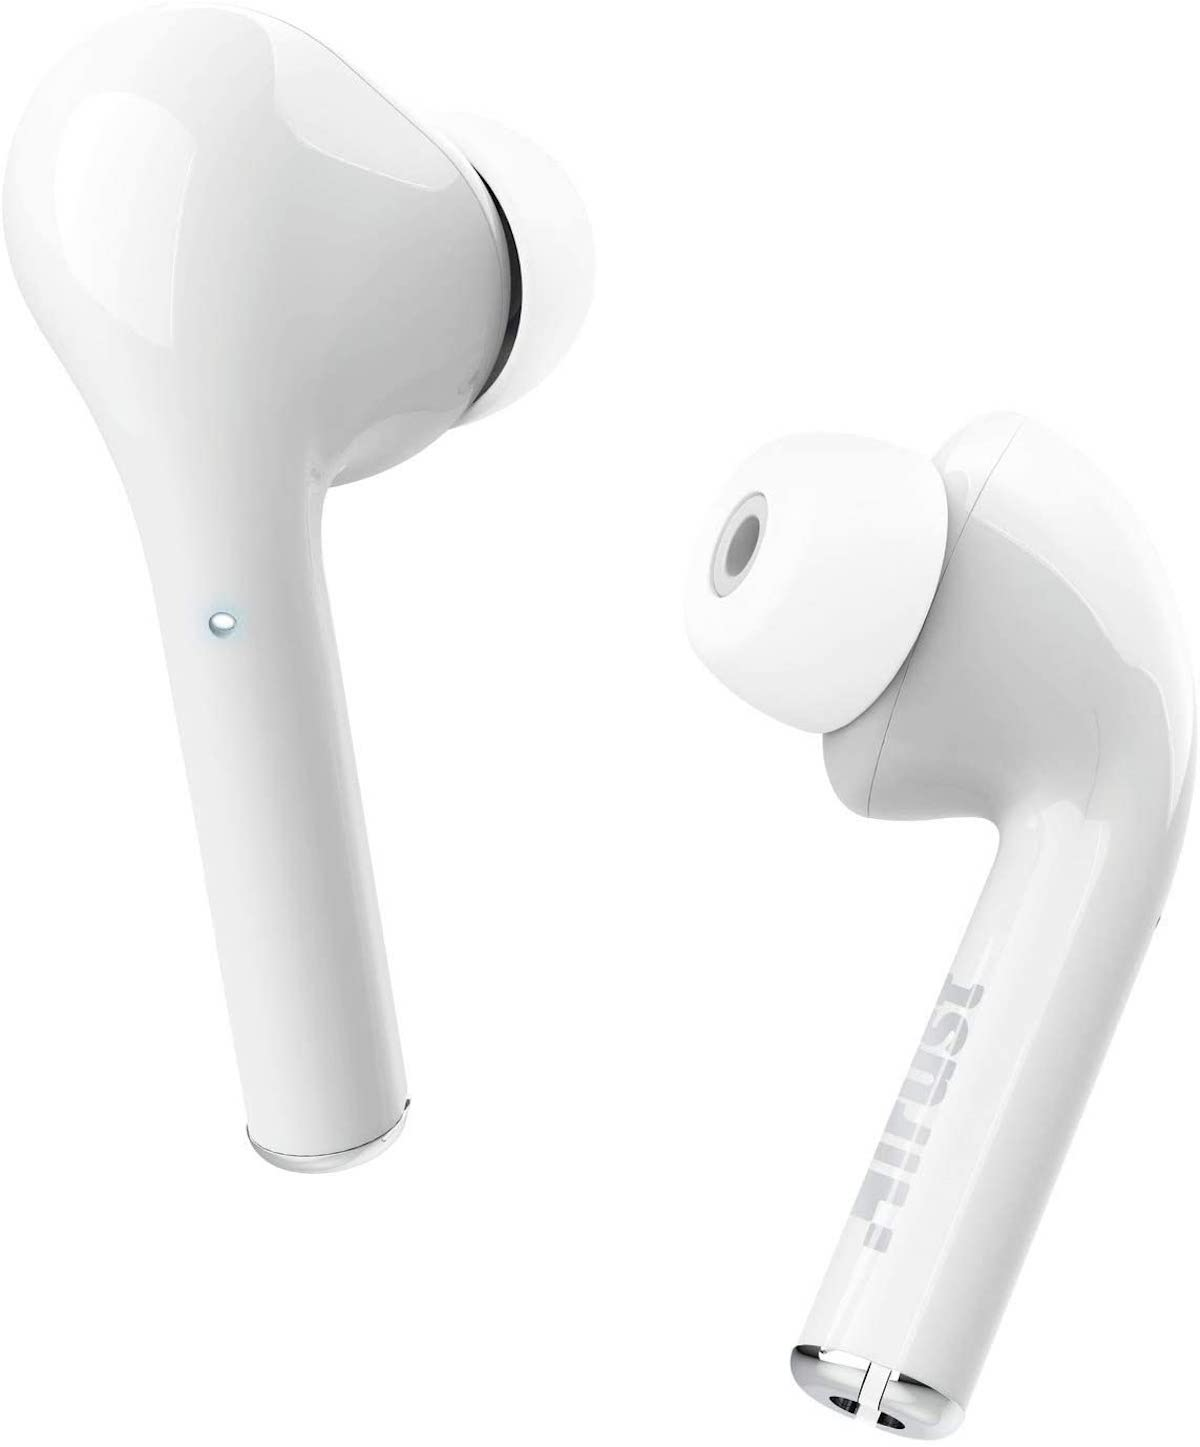 In-ear Weiß 23705, TRUST Kopfhörer Bluetooth